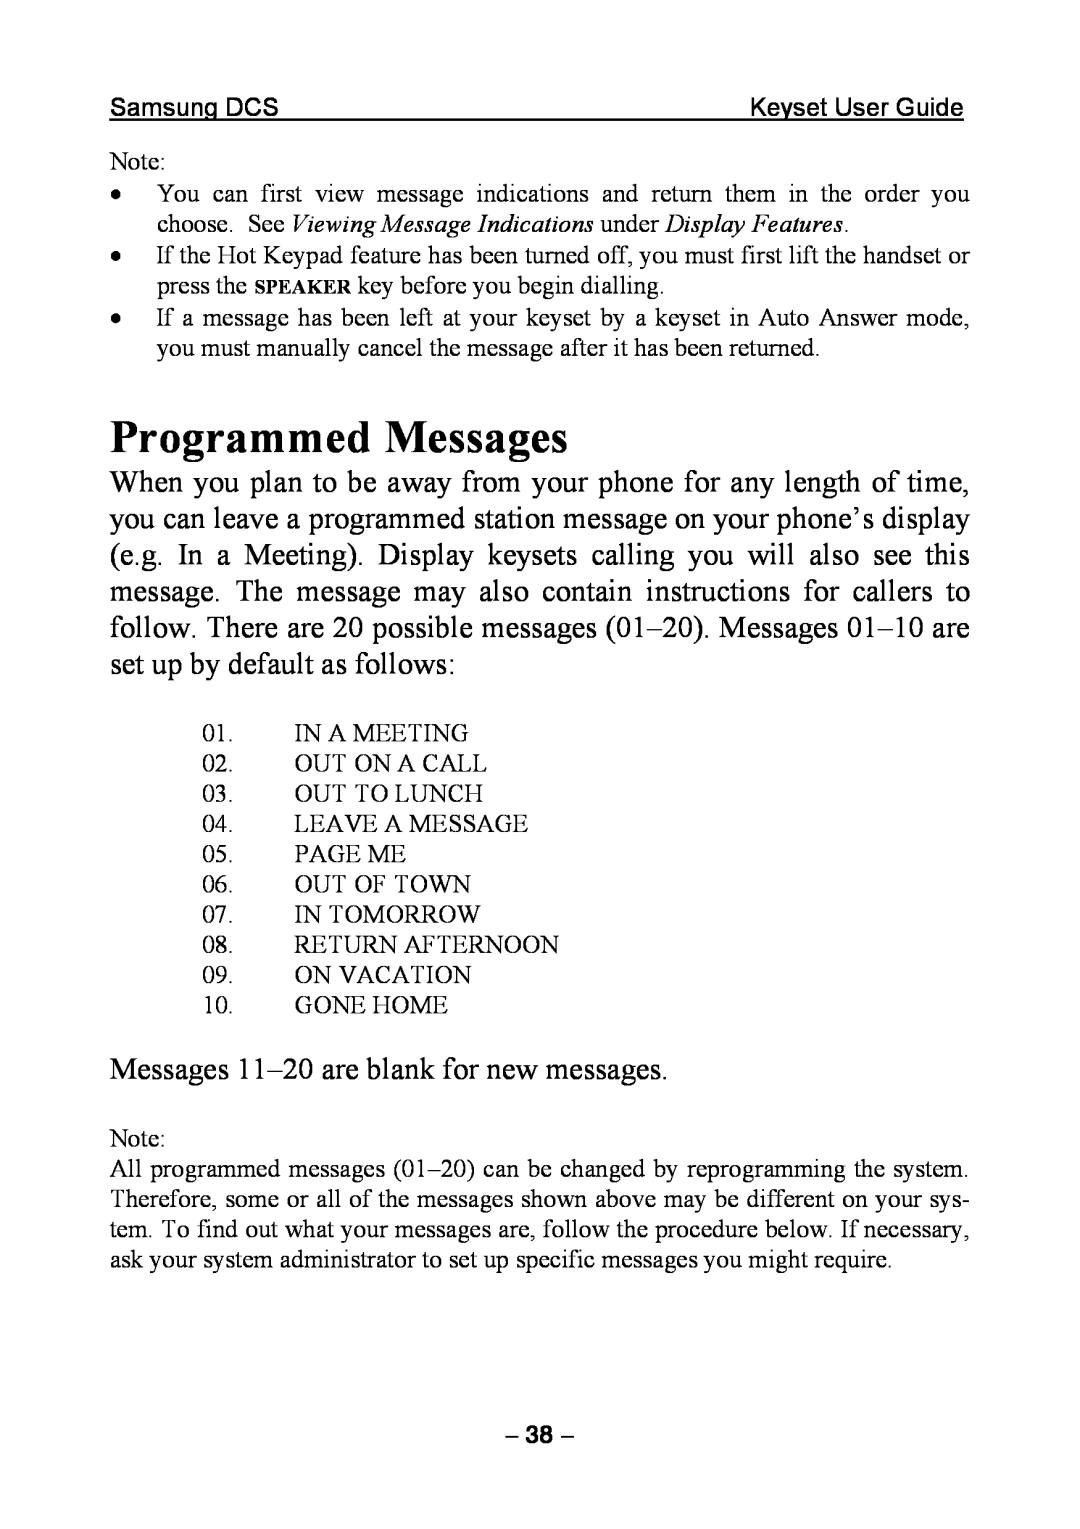 Samsung DCS KEYSET manual Programmed Messages 